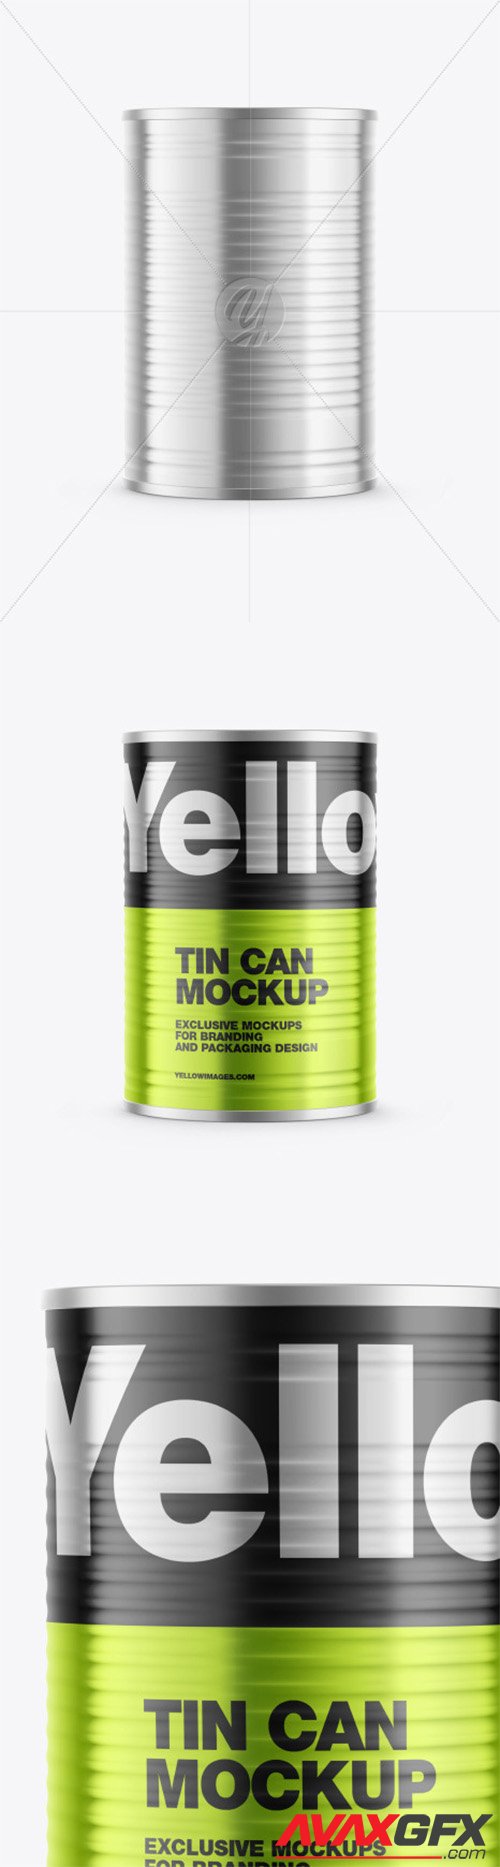 Download 50 Three Glossy Metallic Cans Mockup Branding Mockups PSD Mockup Templates